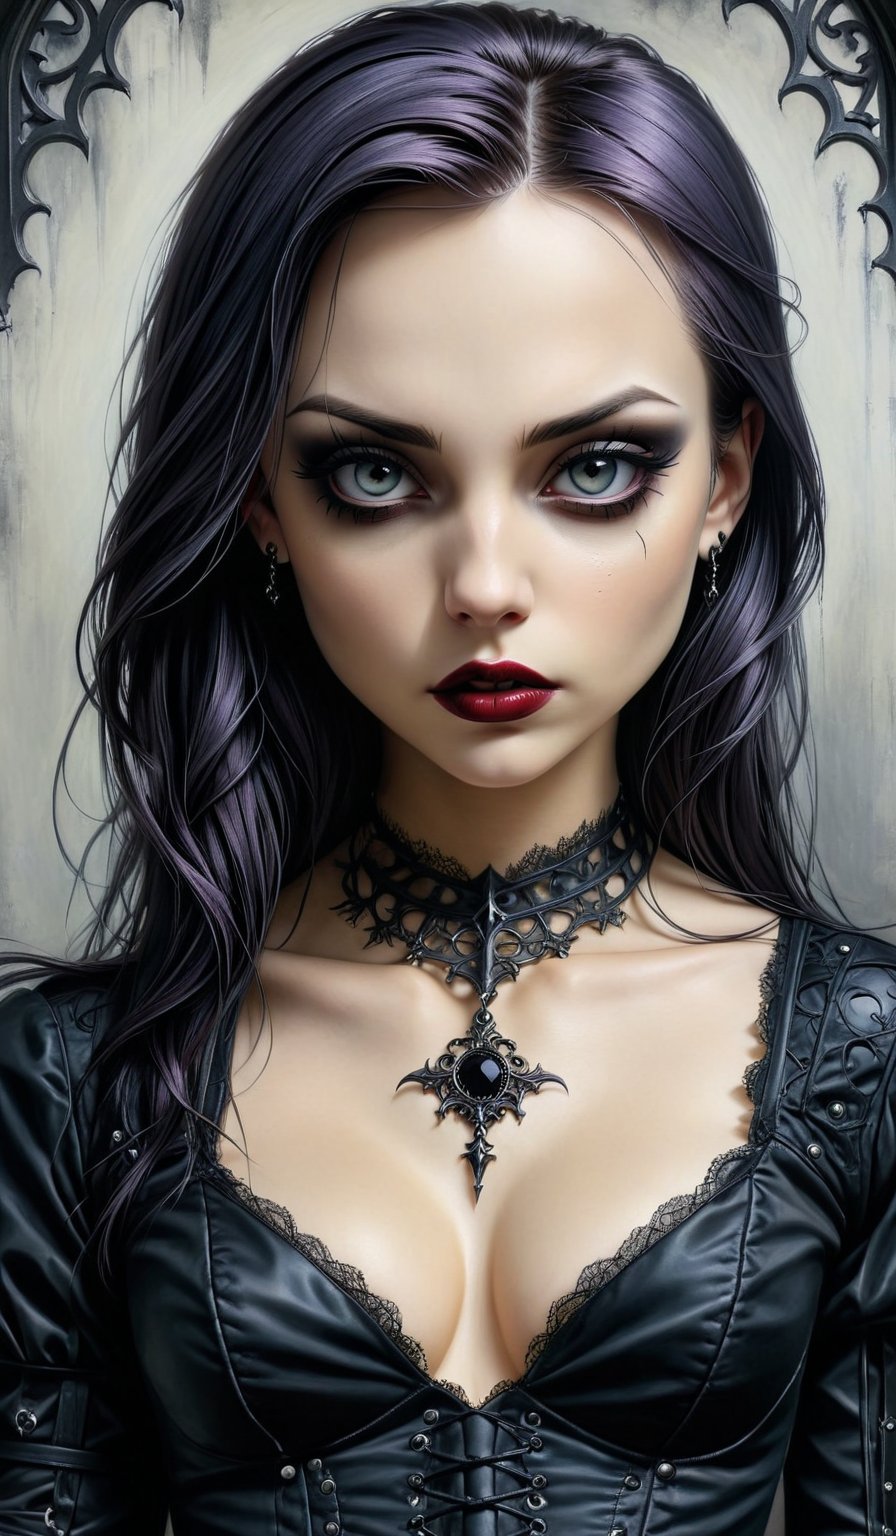 masterpiece,best quality,realistic,style of Jessica Galbreth upper body portrait of dark gothic girl,Gothic,emo